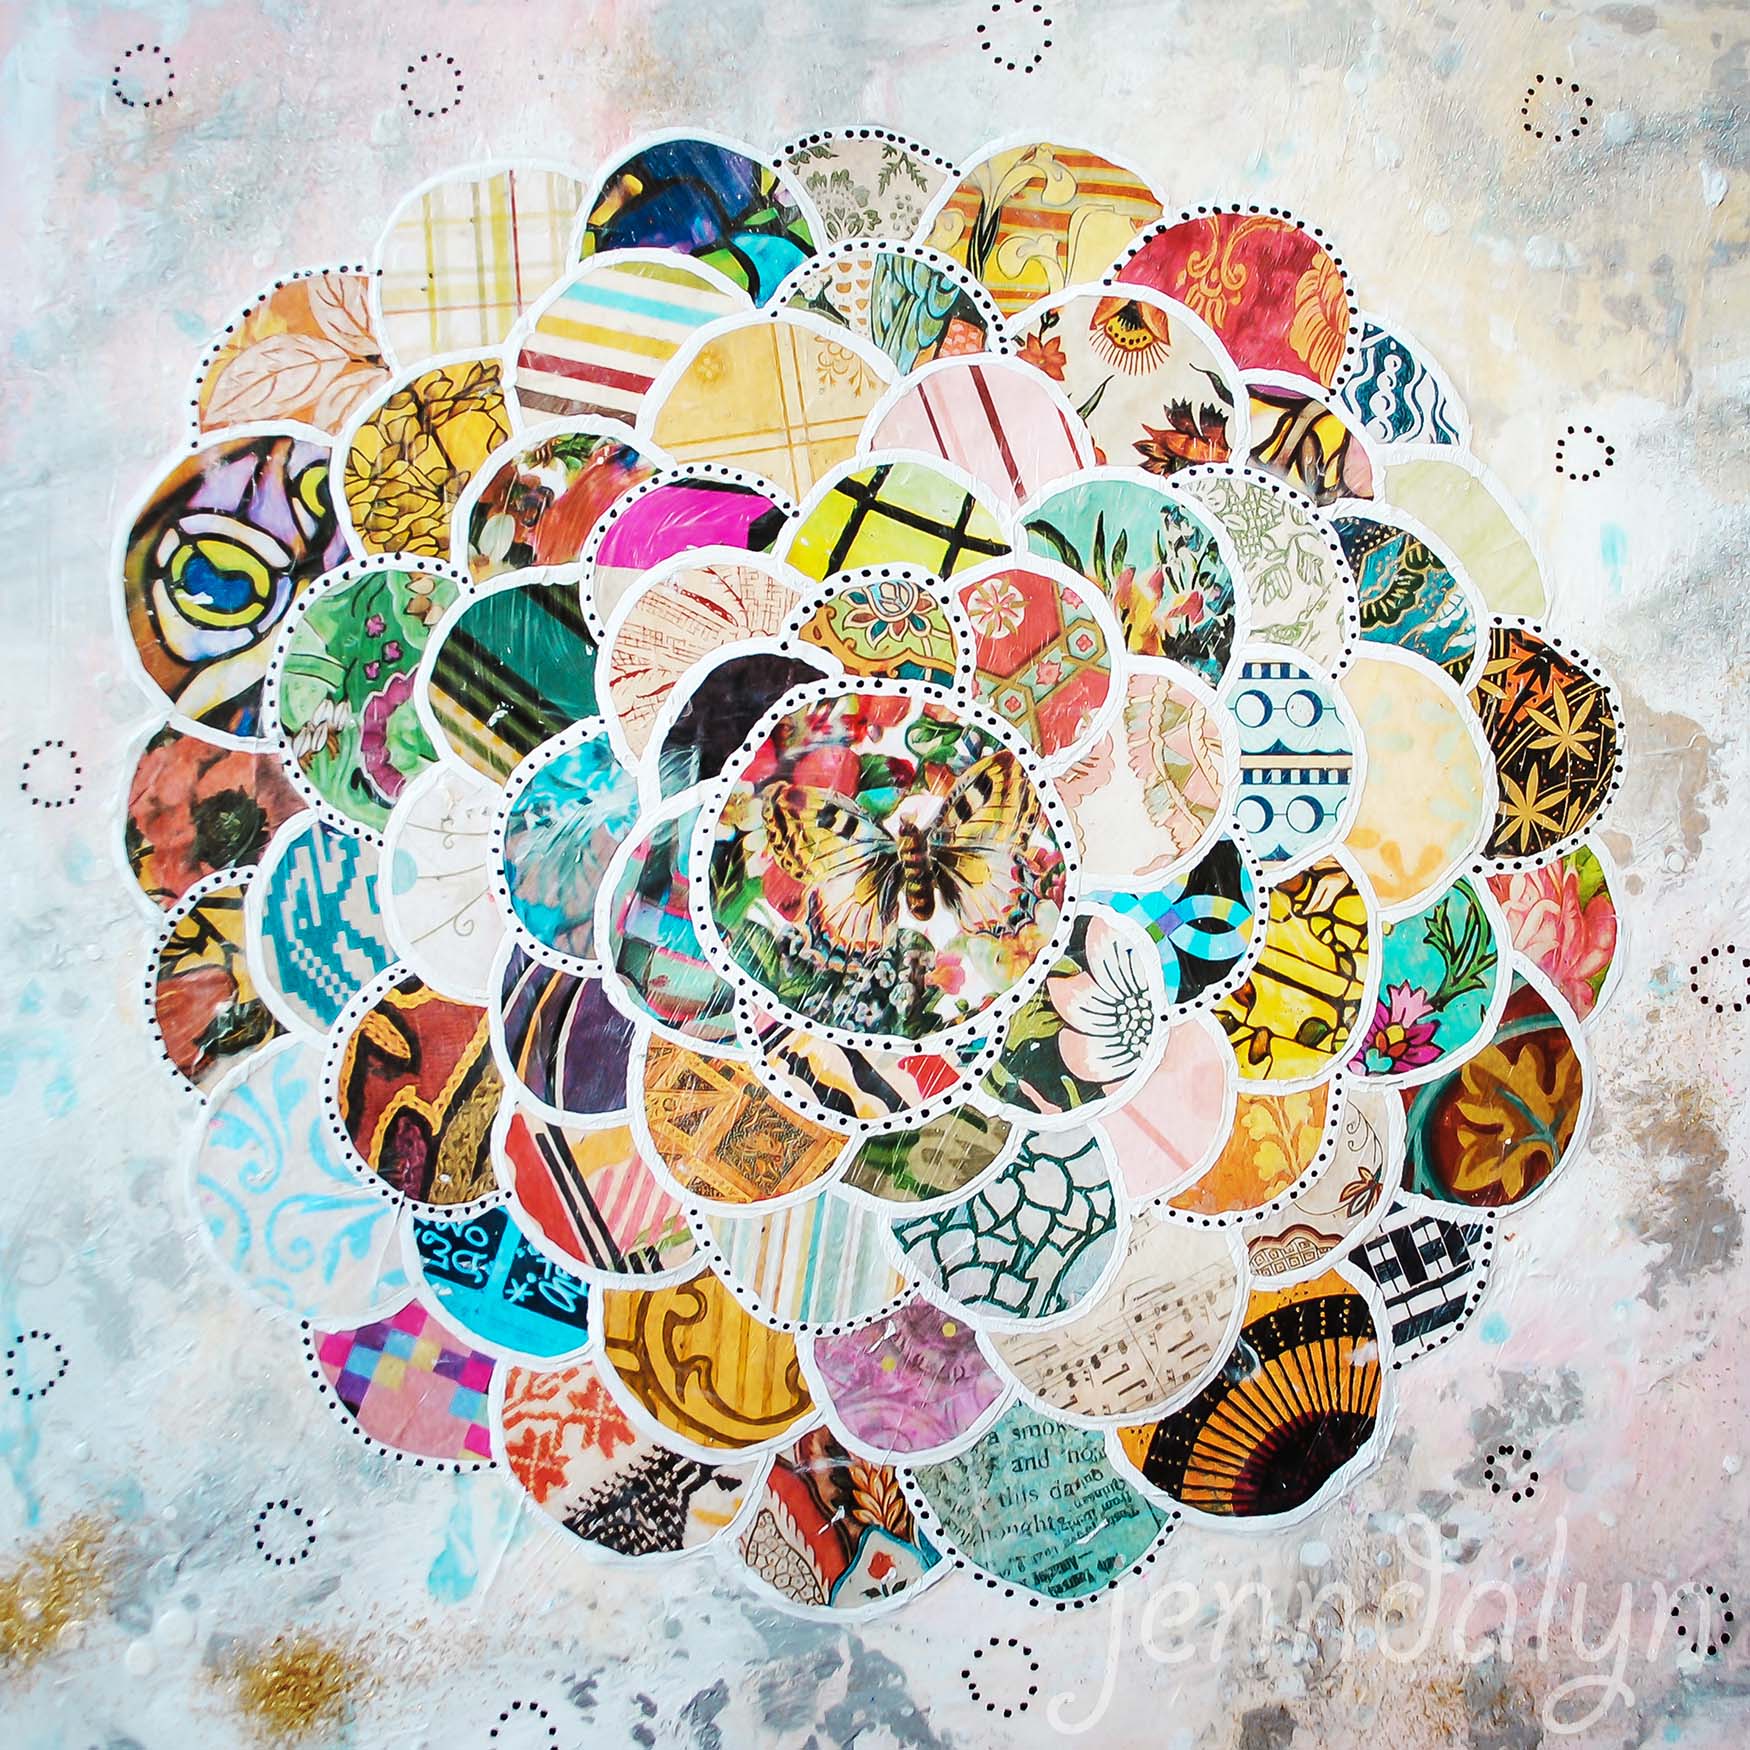 Springbloom x 10 paper print, mixed media collage art, collage print, flower painting, flower art, wallpaper · Jenndalyn Art · Online Store Powered